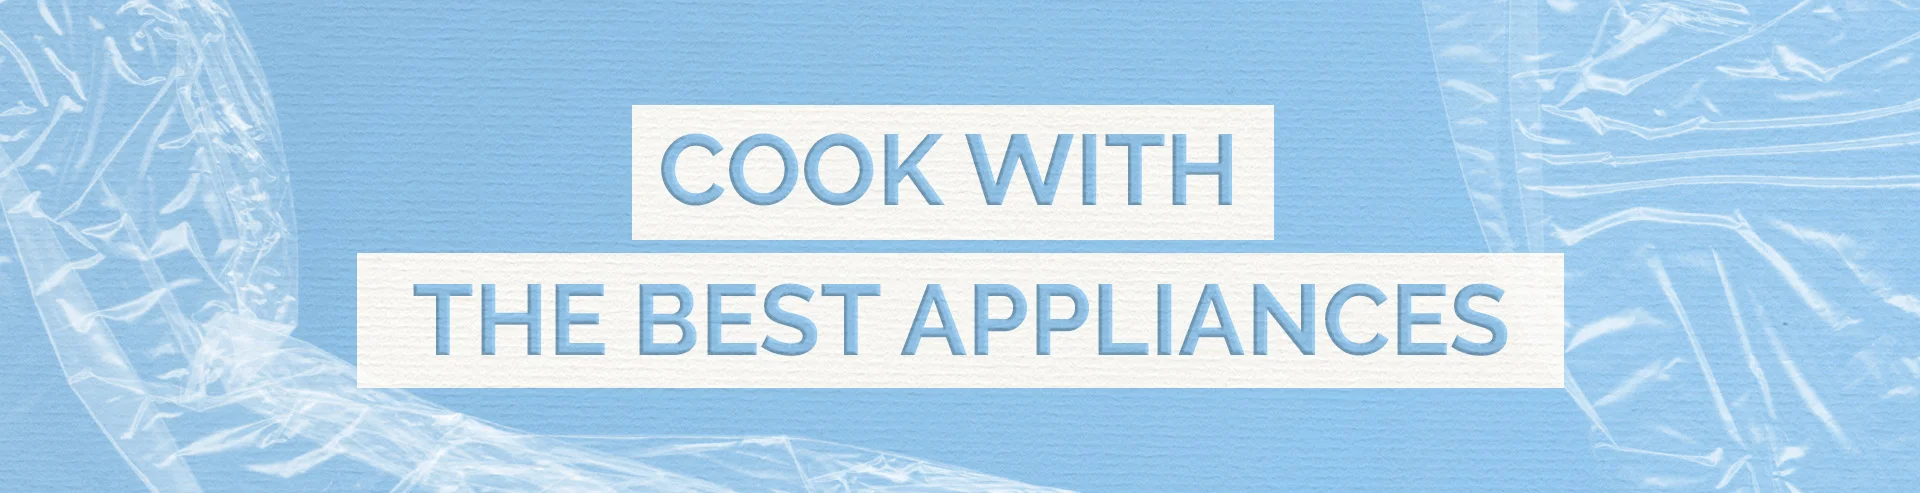 Full-Width-Gift-ideas-Cook-with-the-Best-Appliances-Desktop.webp